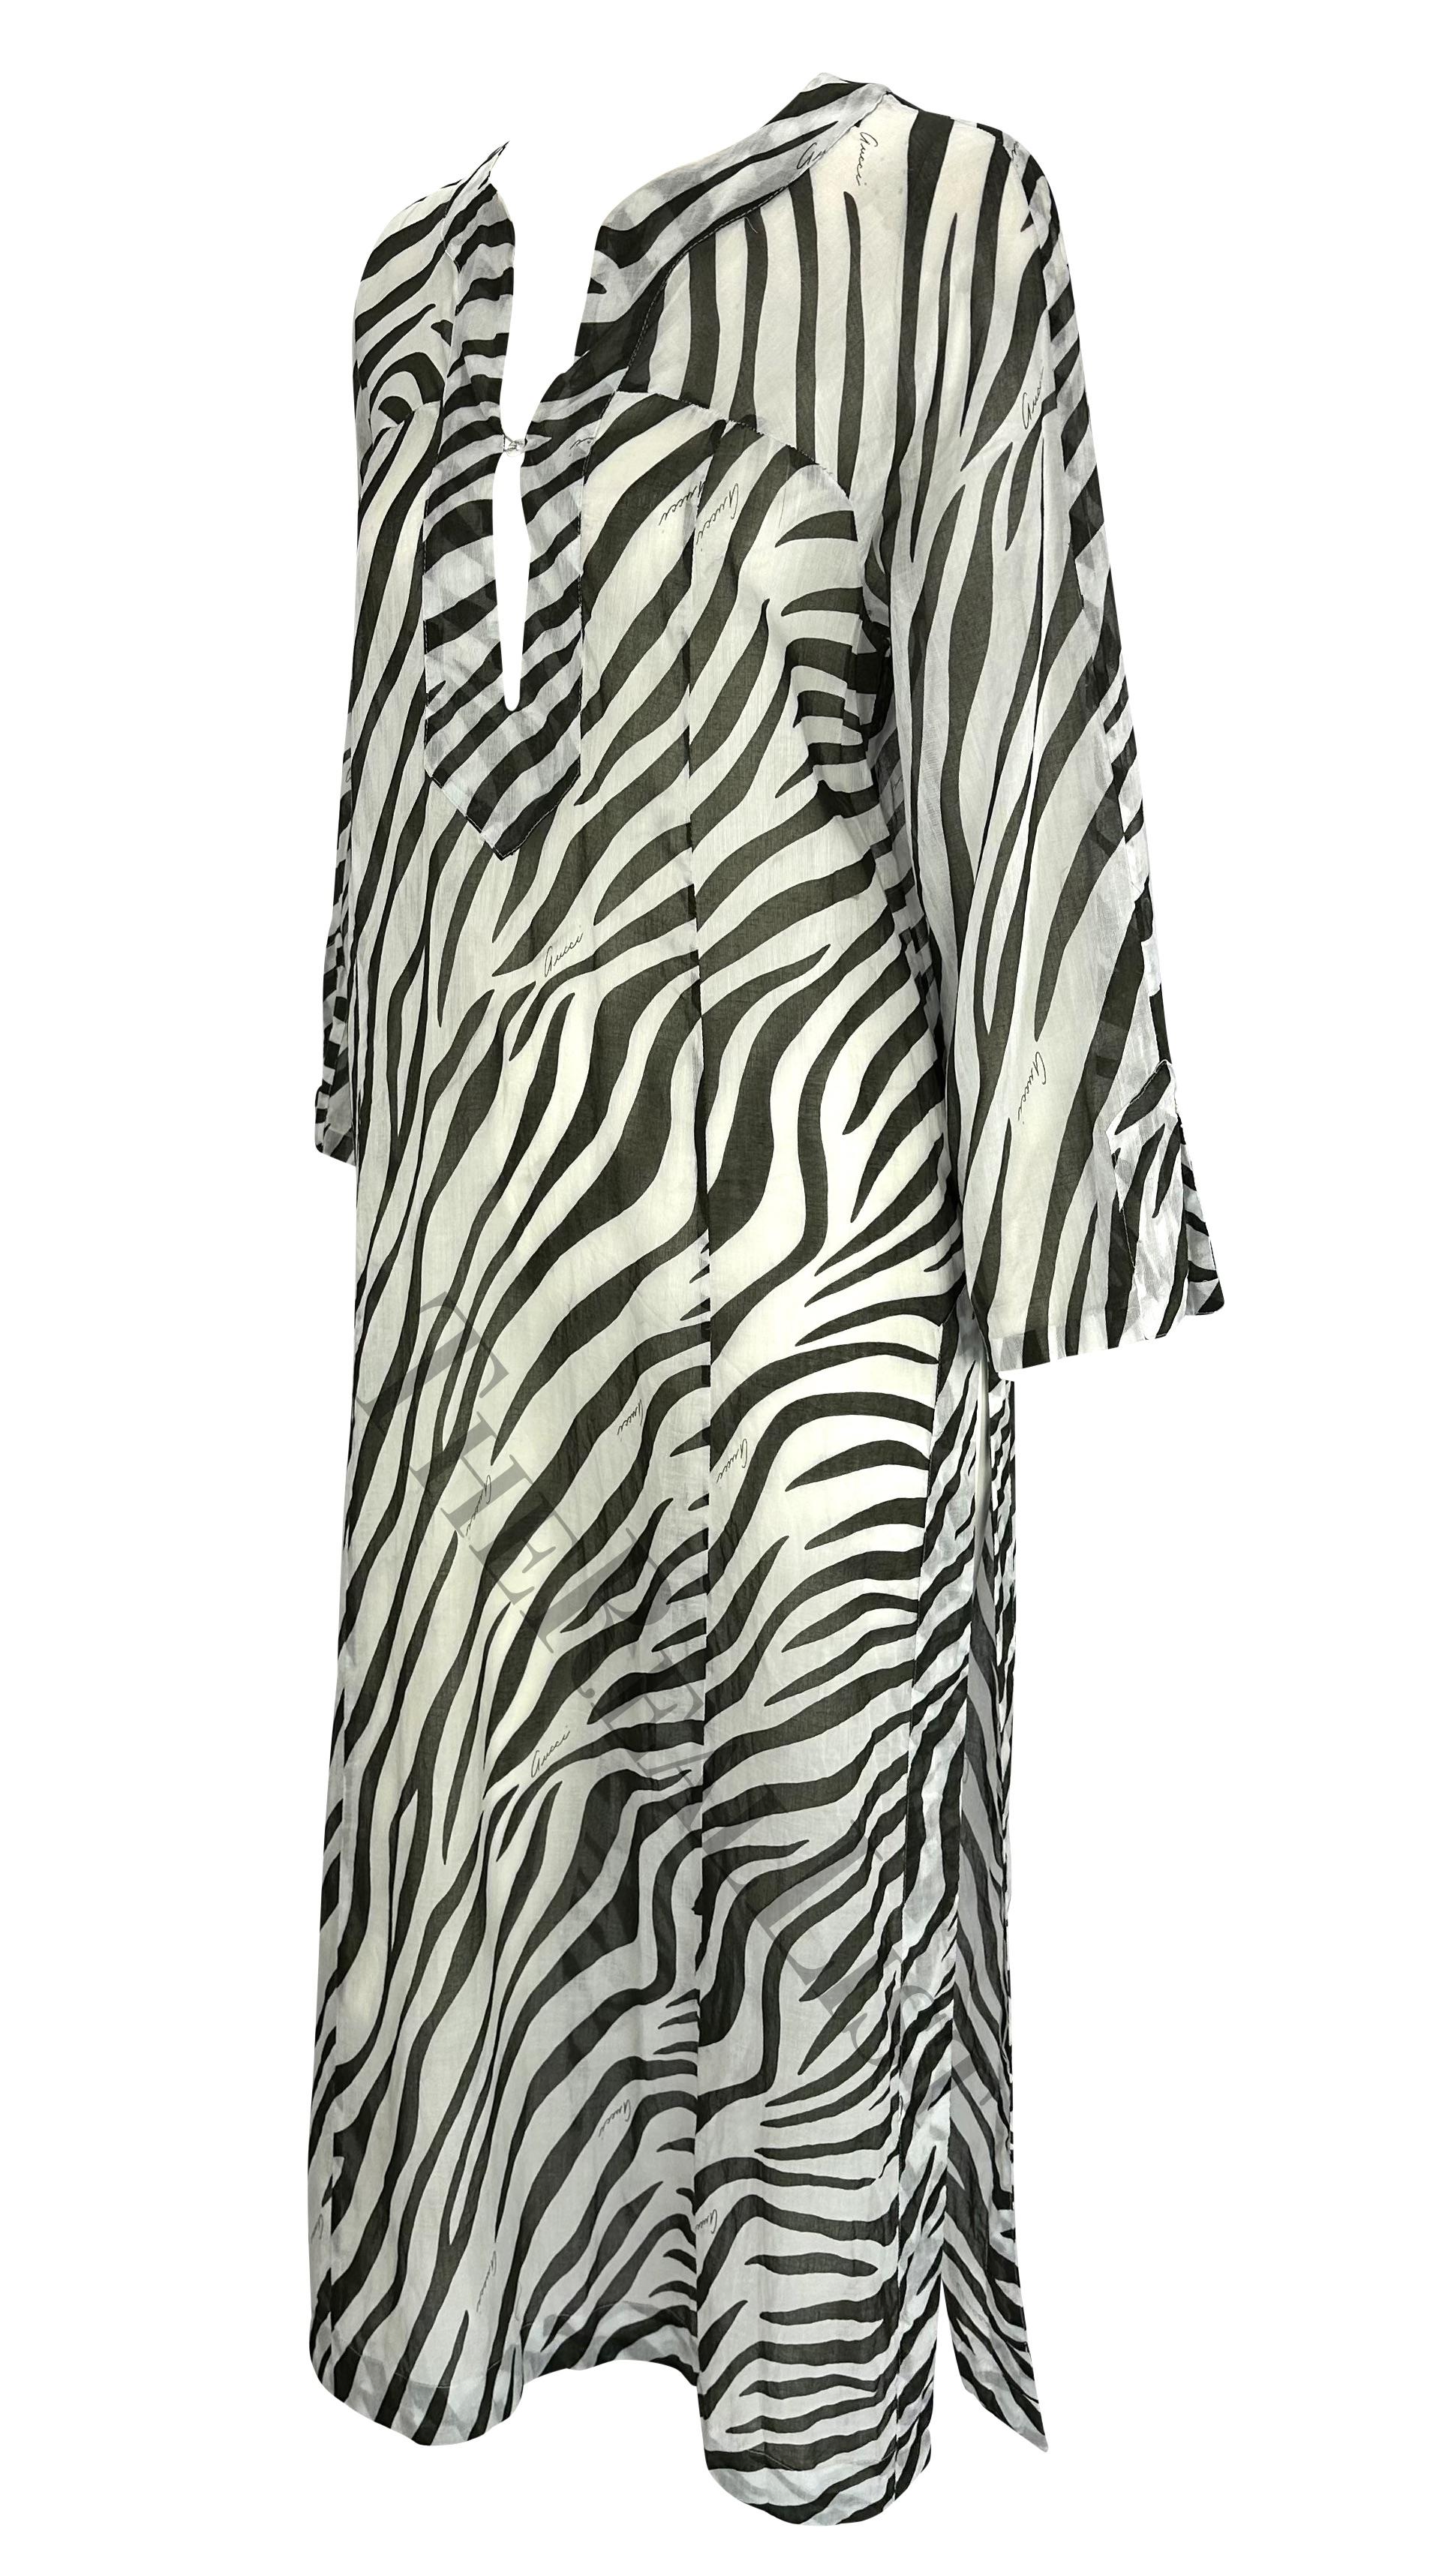 Women's S/S 1996 Gucci by Tom Ford Runway Black White Zebra Print Sheer Kaftan Dress For Sale